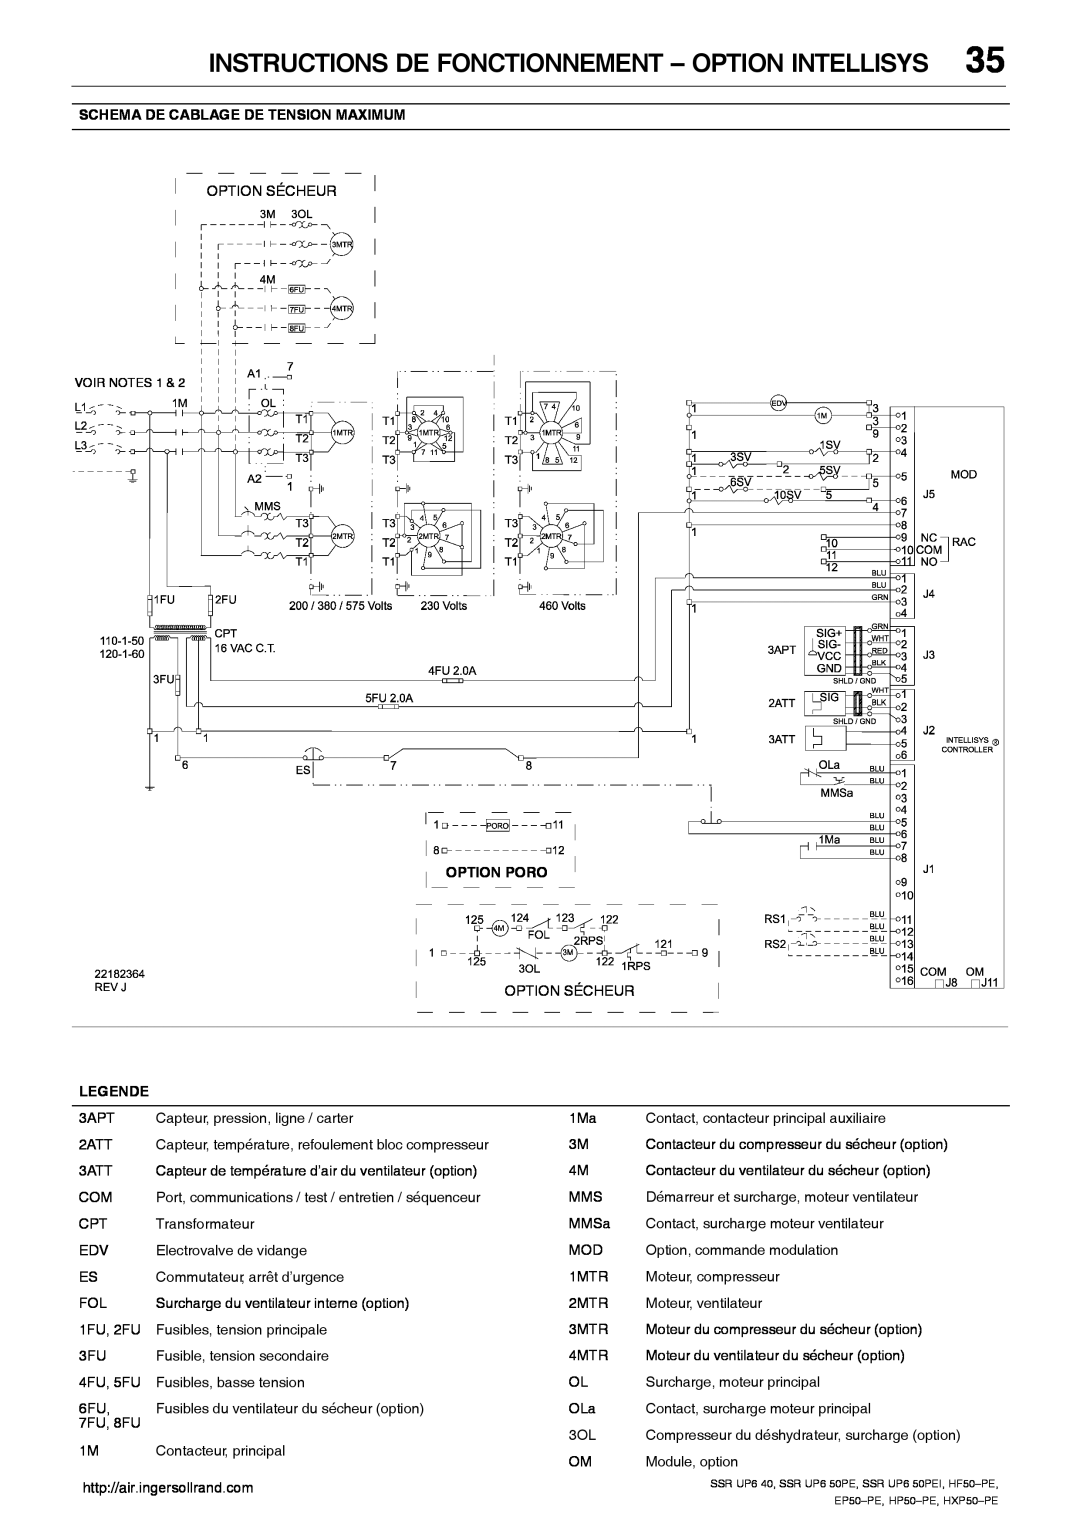 Ingersoll-Rand SSR UP6 40, SSR UP6 50PEI HF50-PE, EP50-PE, HXP50-PE Instructions De Fonctionnement - Option Intellisys 